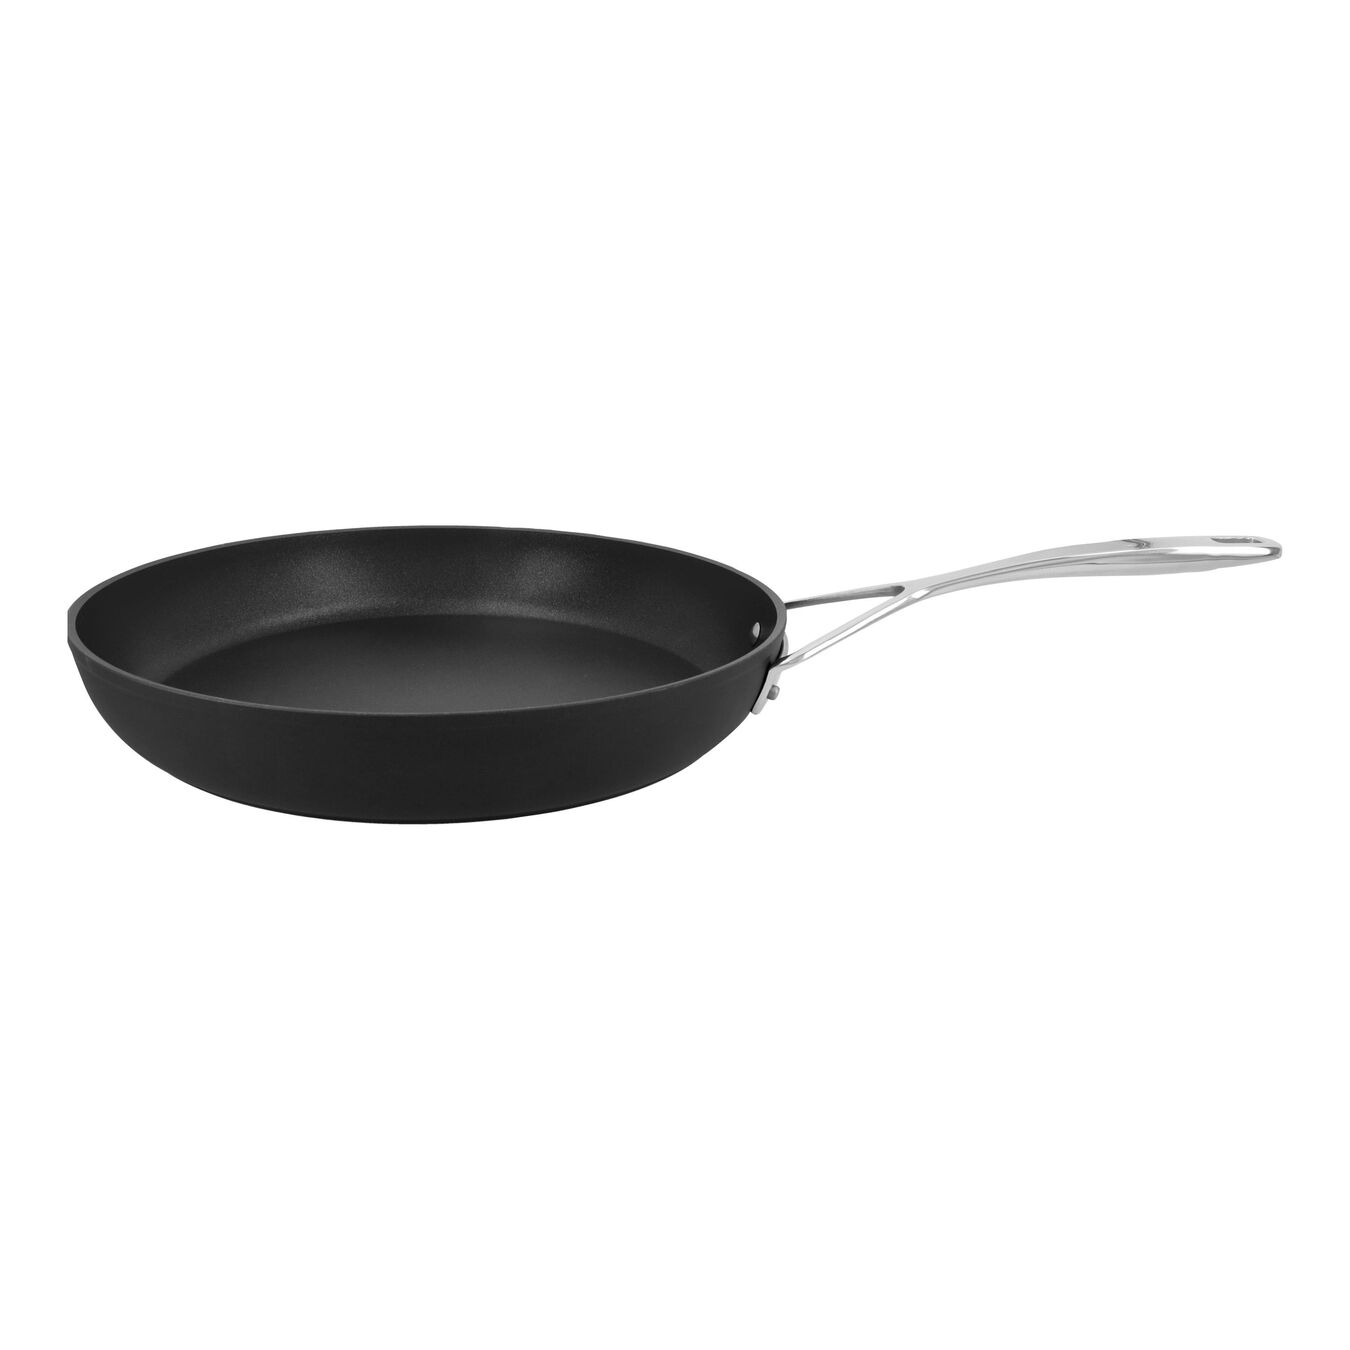 32 cm Aluminum Frying pan silver-black,,large 1